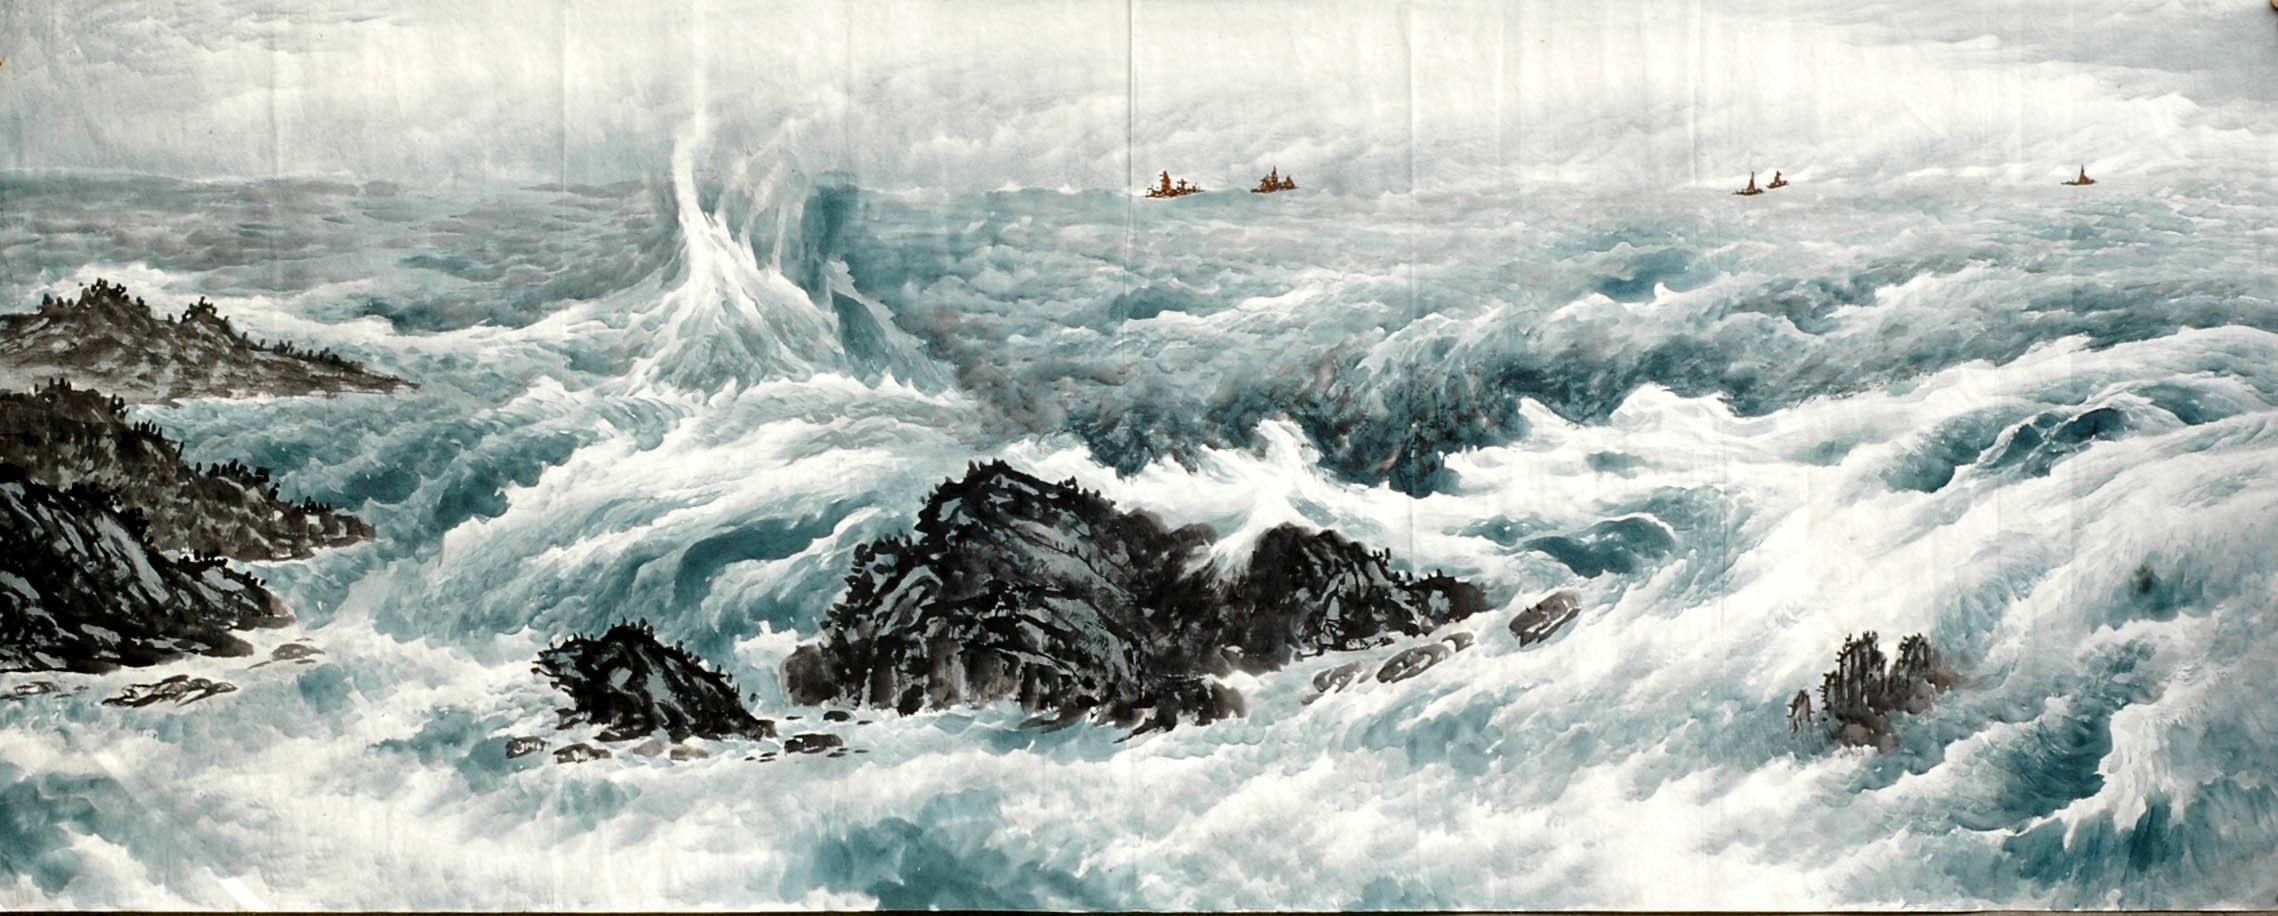 Chinese Sea Painting - CNAG010038